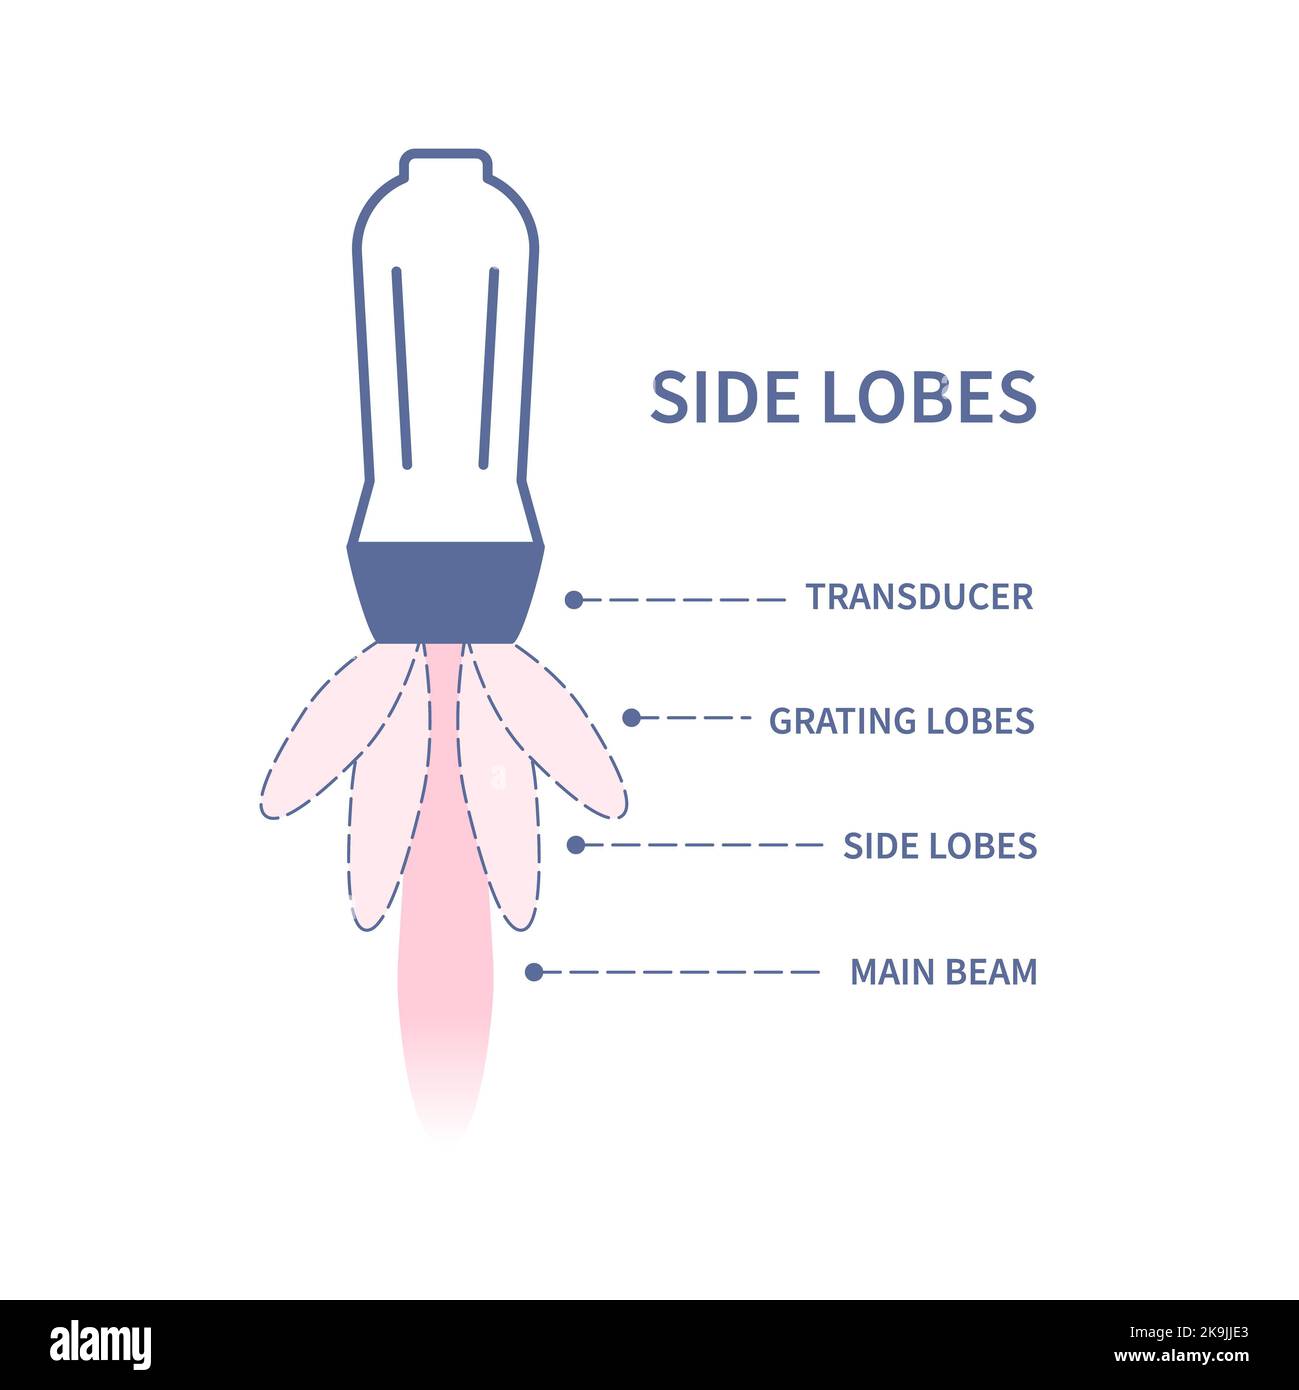 Side lobes in ultrasound, illustration Stock Photo